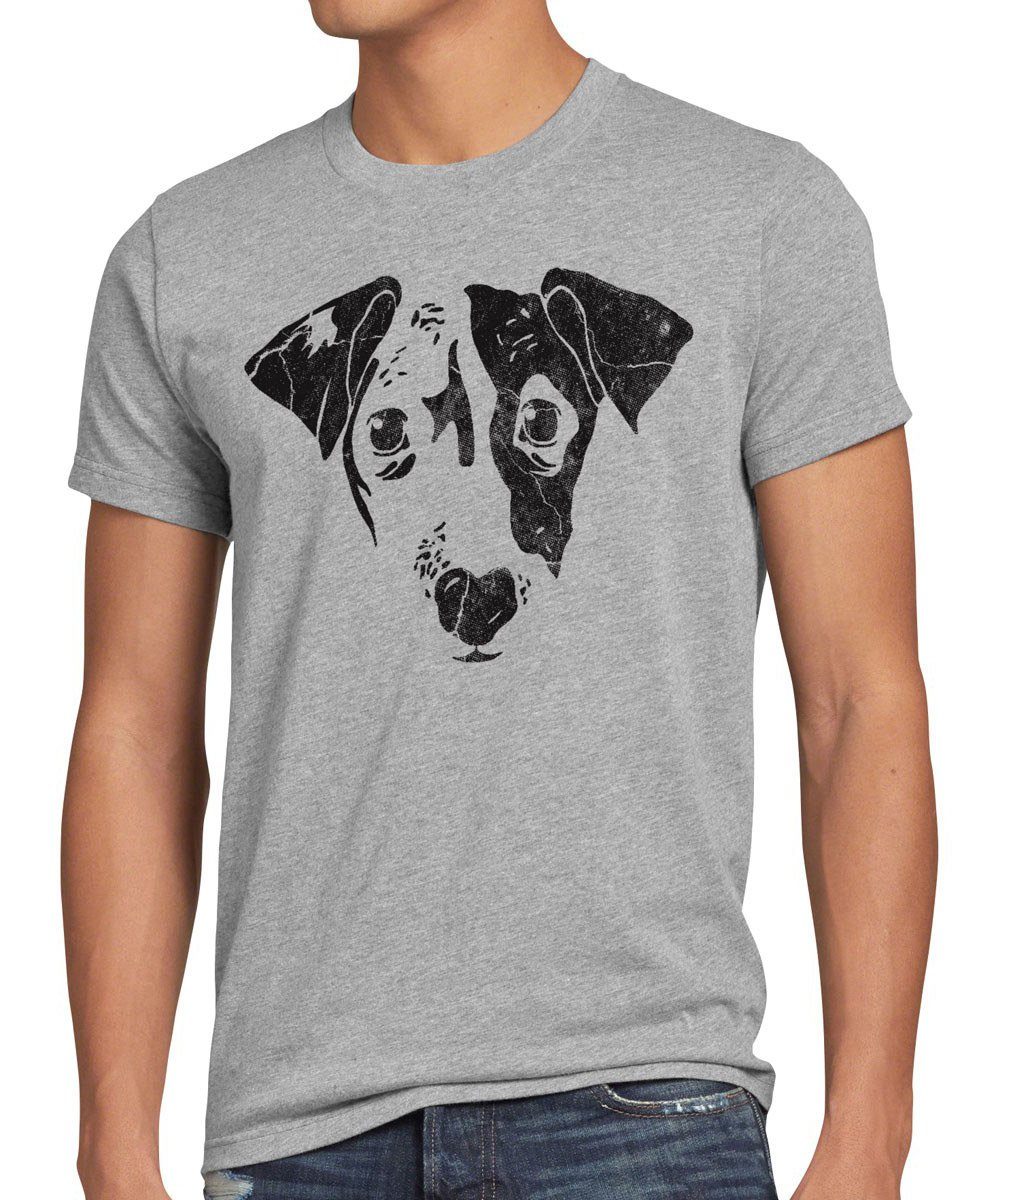 style3 Print-Shirt Herren T-Shirt Dog Hund Haustier Tier jack russel terrier Hundegesicht kopf top grau meliert